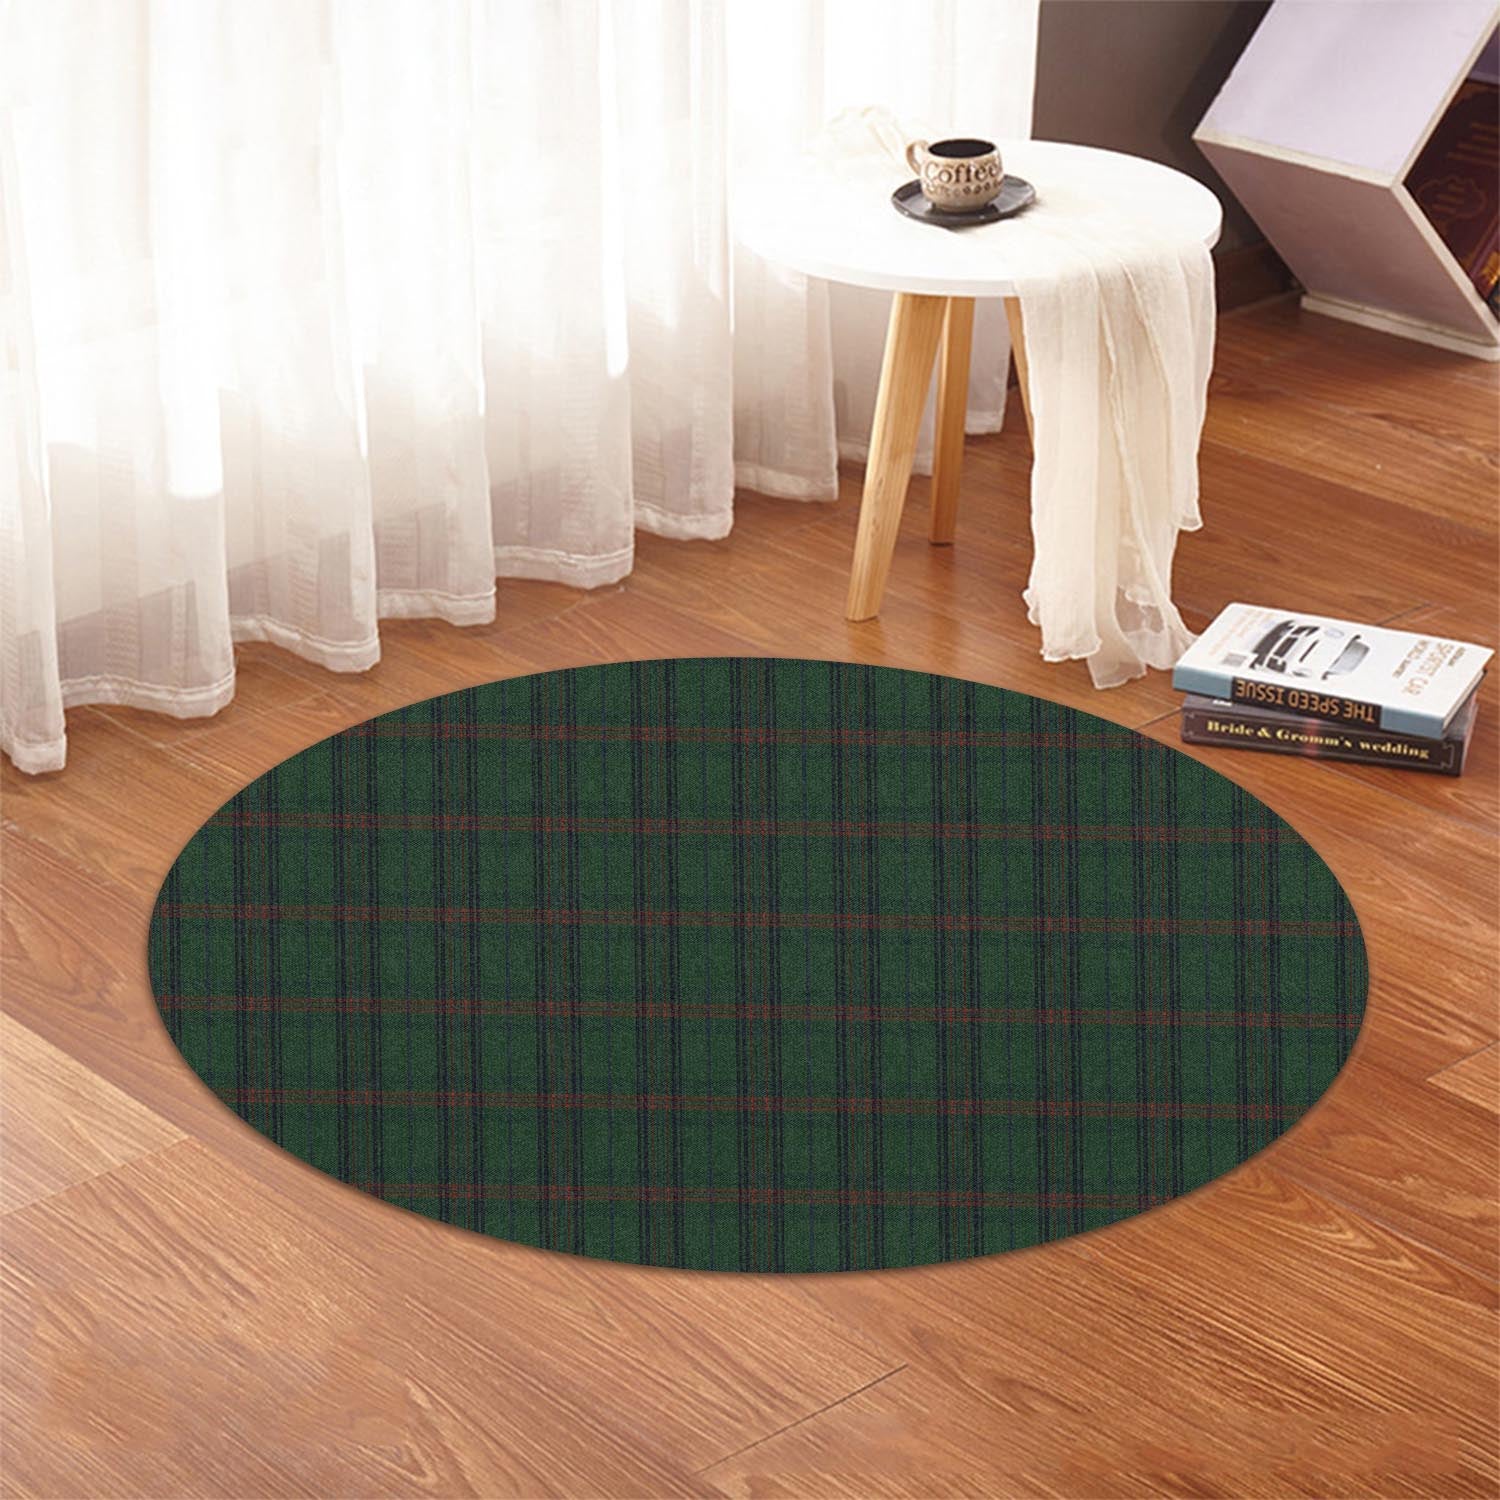 owen-of-wales-tartan-round-rug